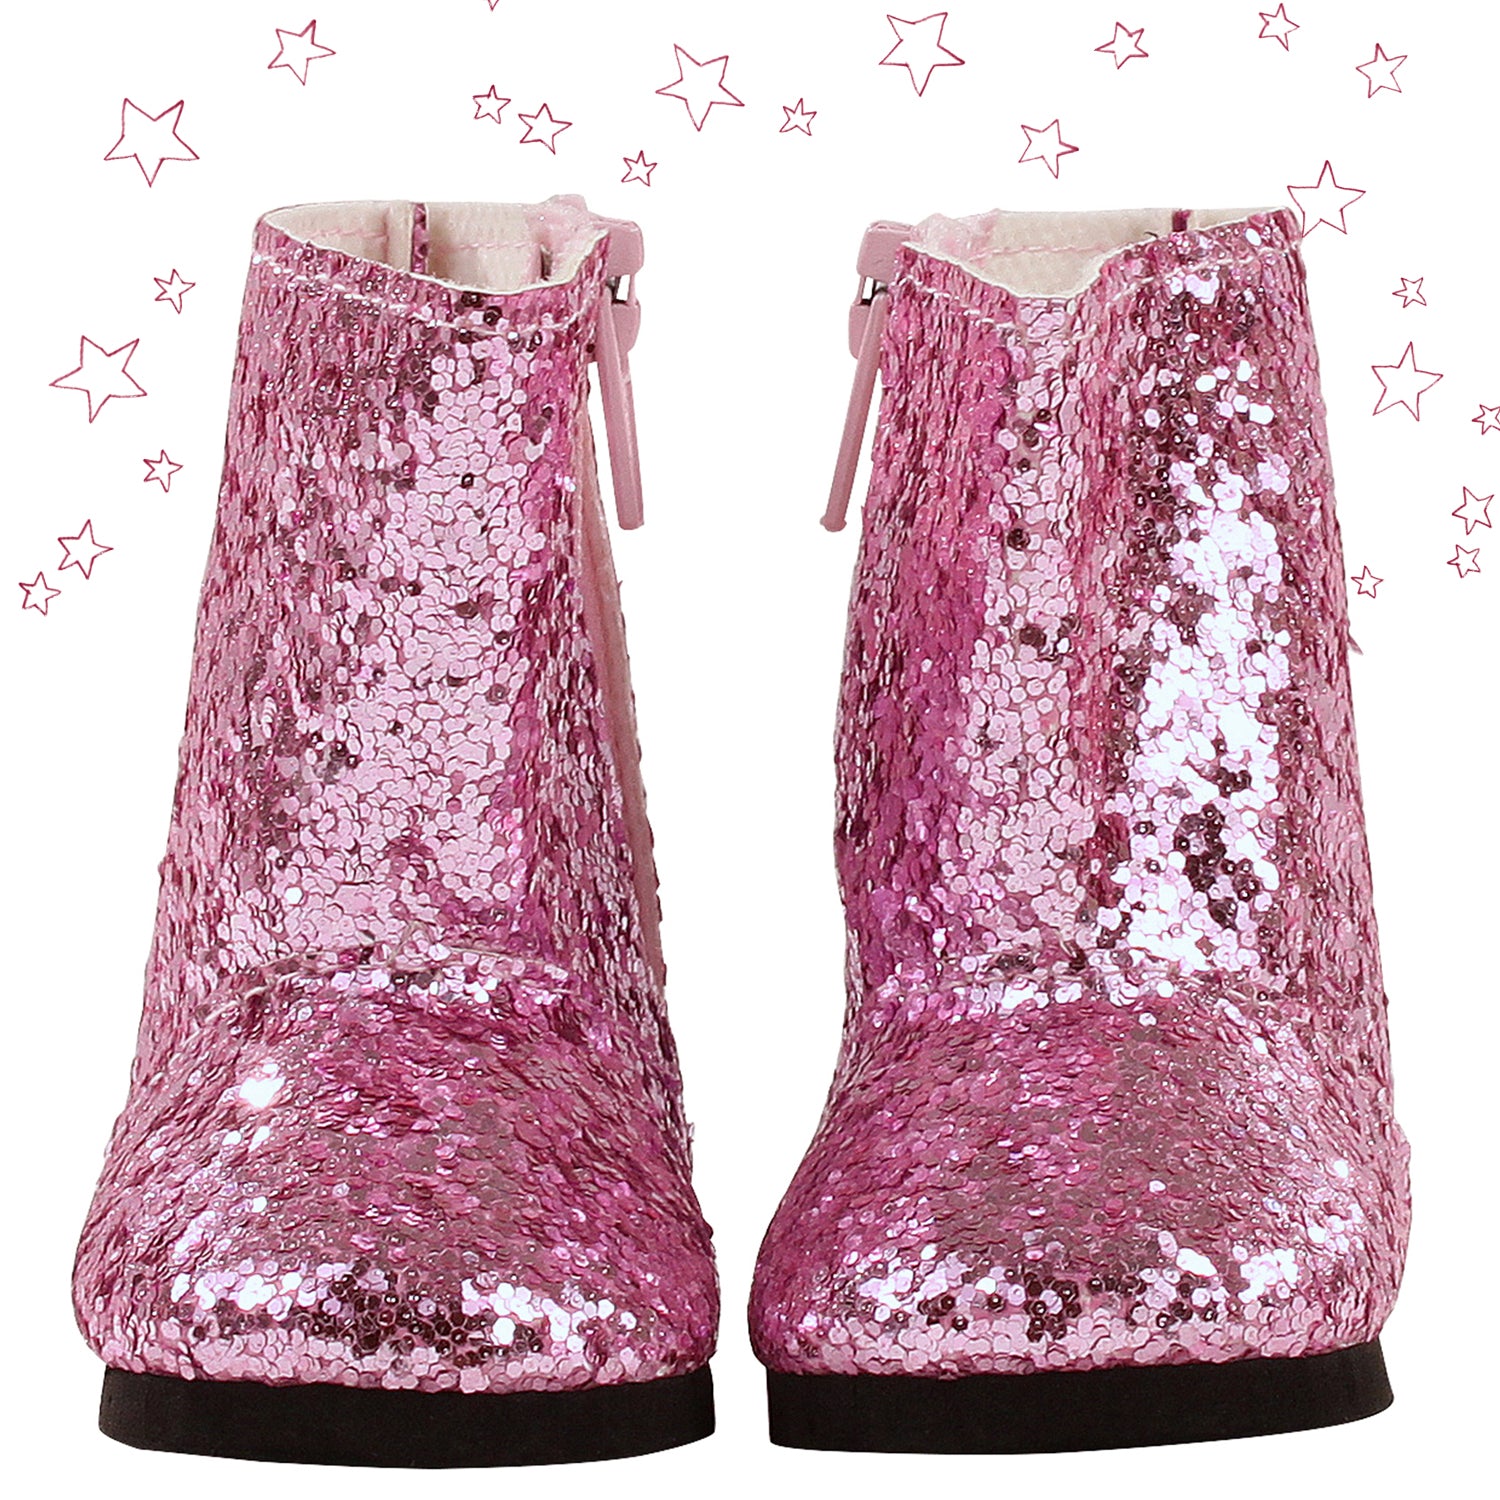 inc glitter boots